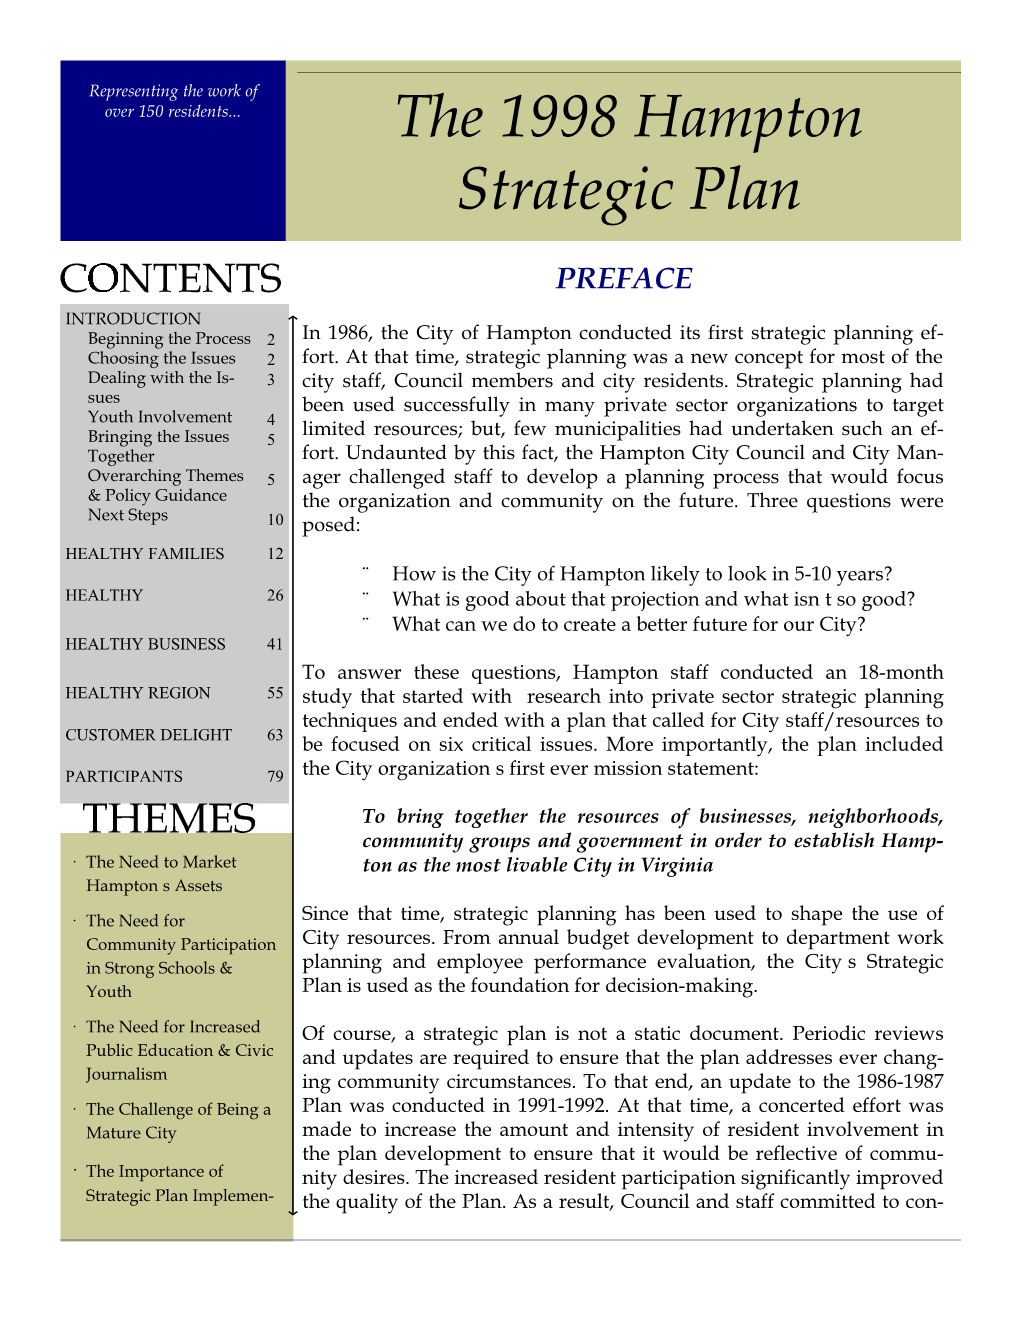 The 1998 Hampton Strategic Plan